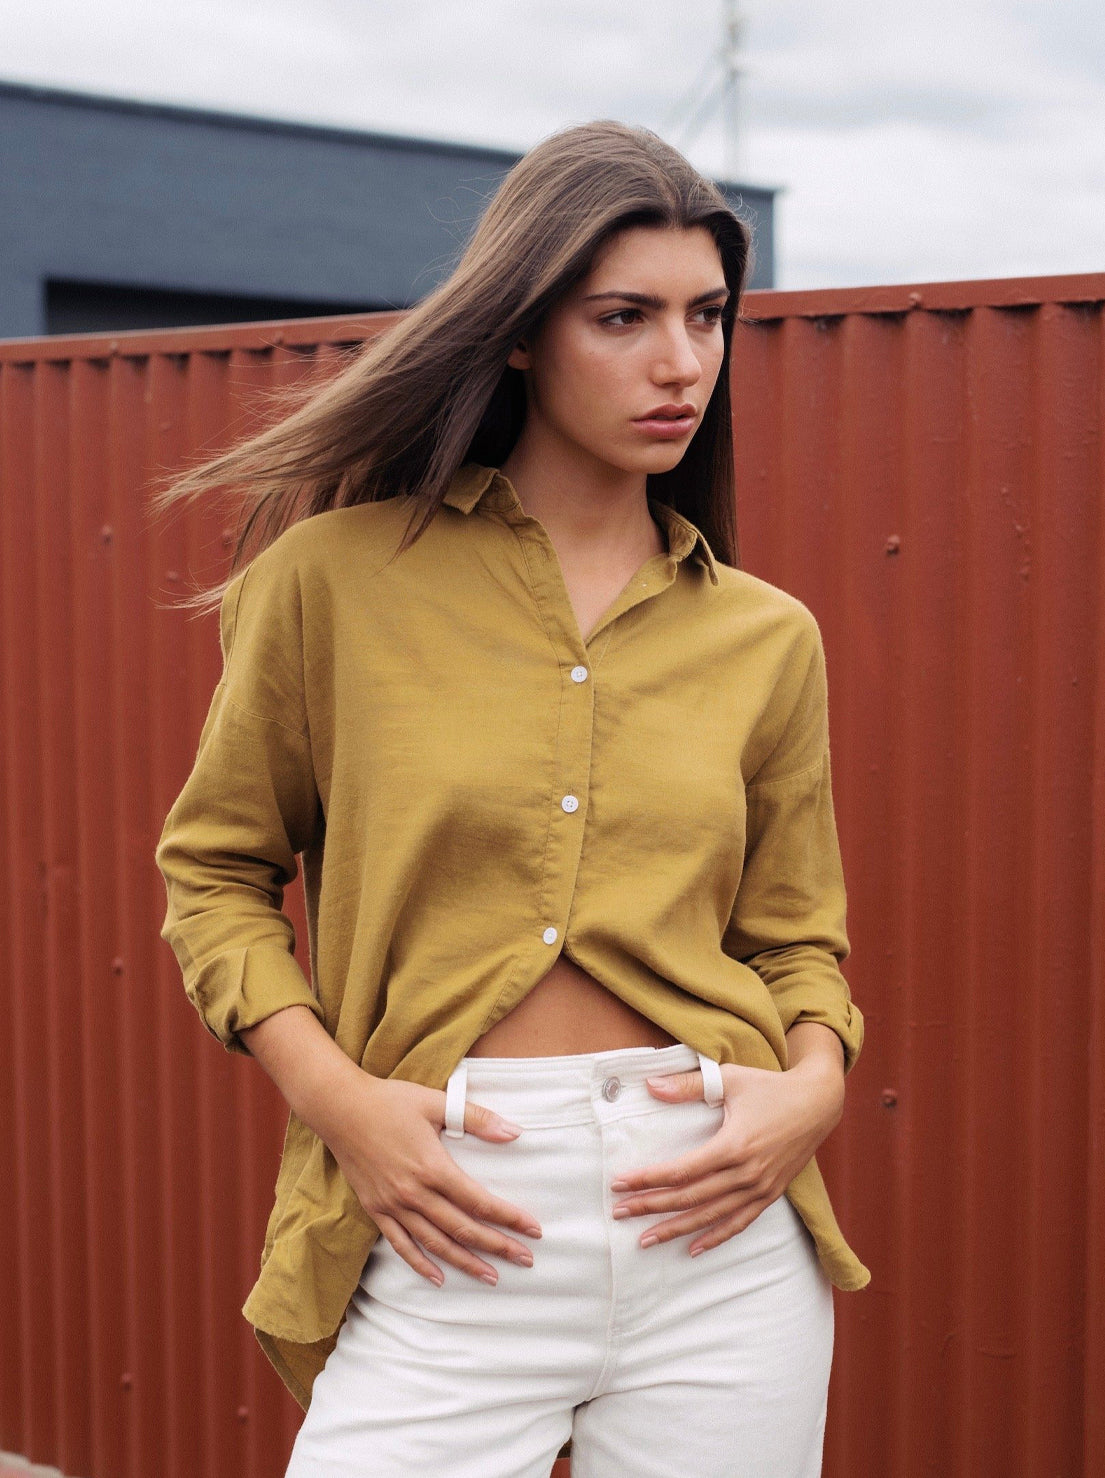 Hemp Clothing Australia - Stirling Shirt - Willow